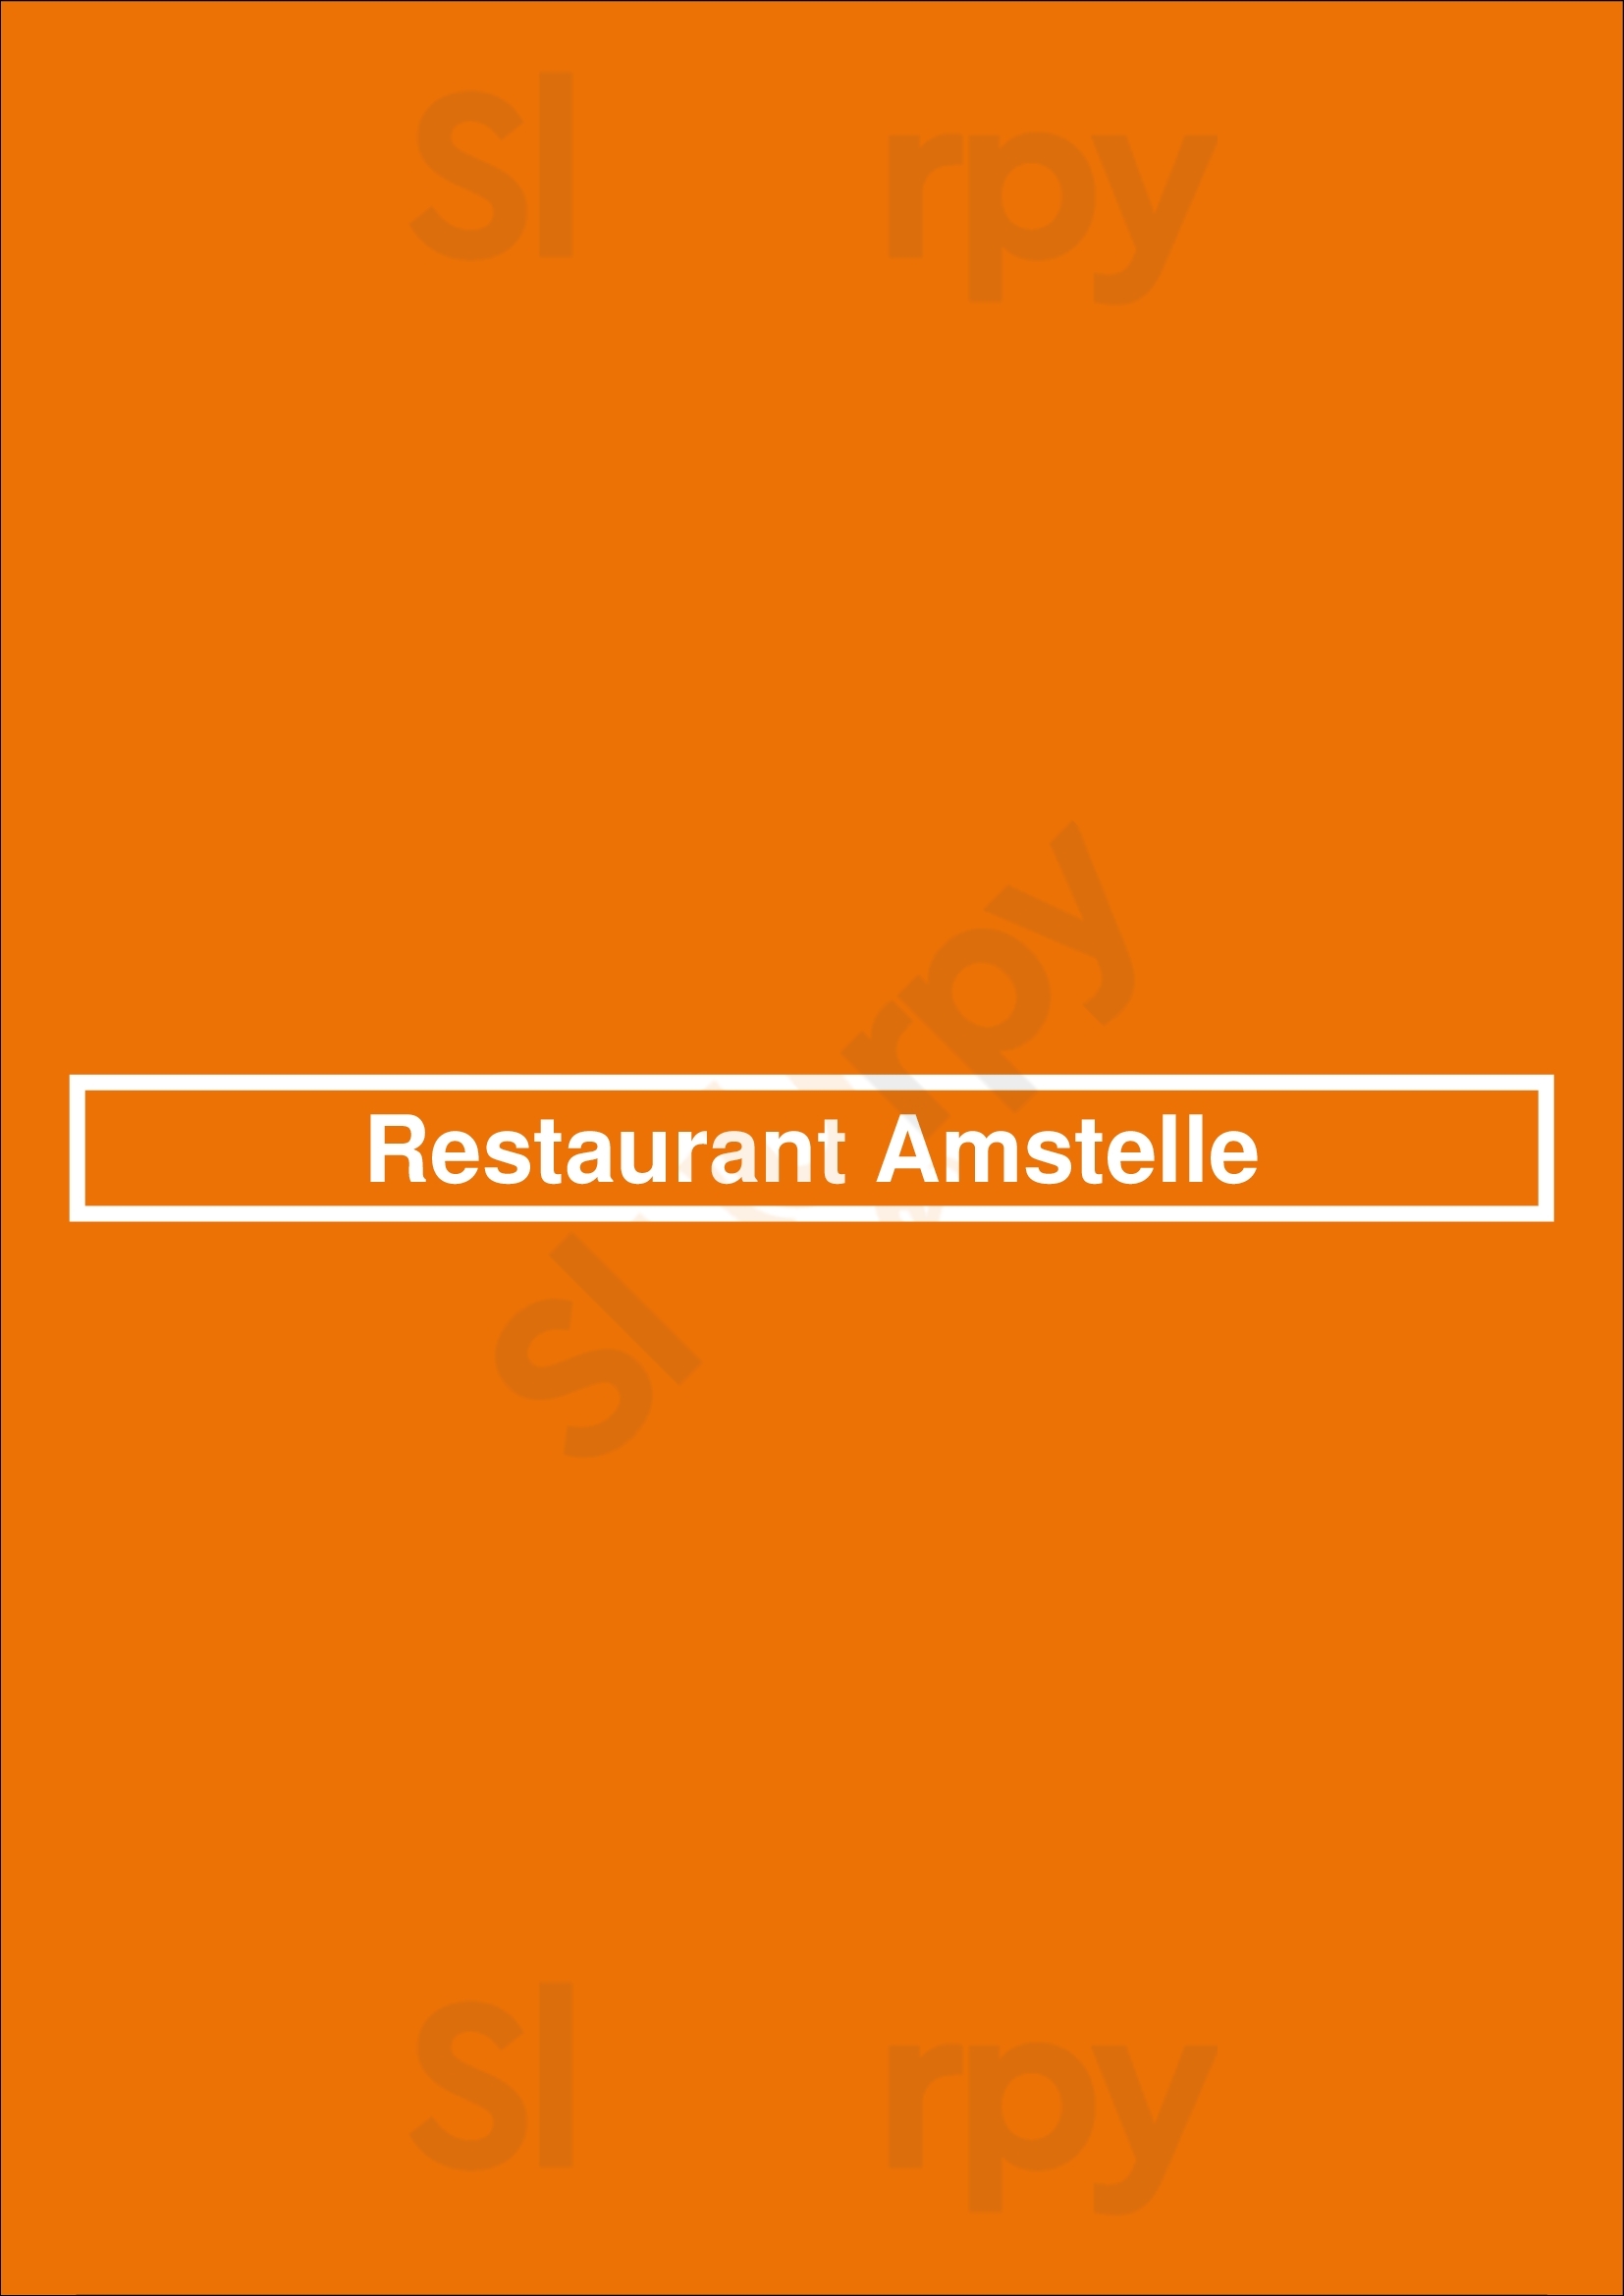 Restaurant Amstelle Amsterdam Menu - 1